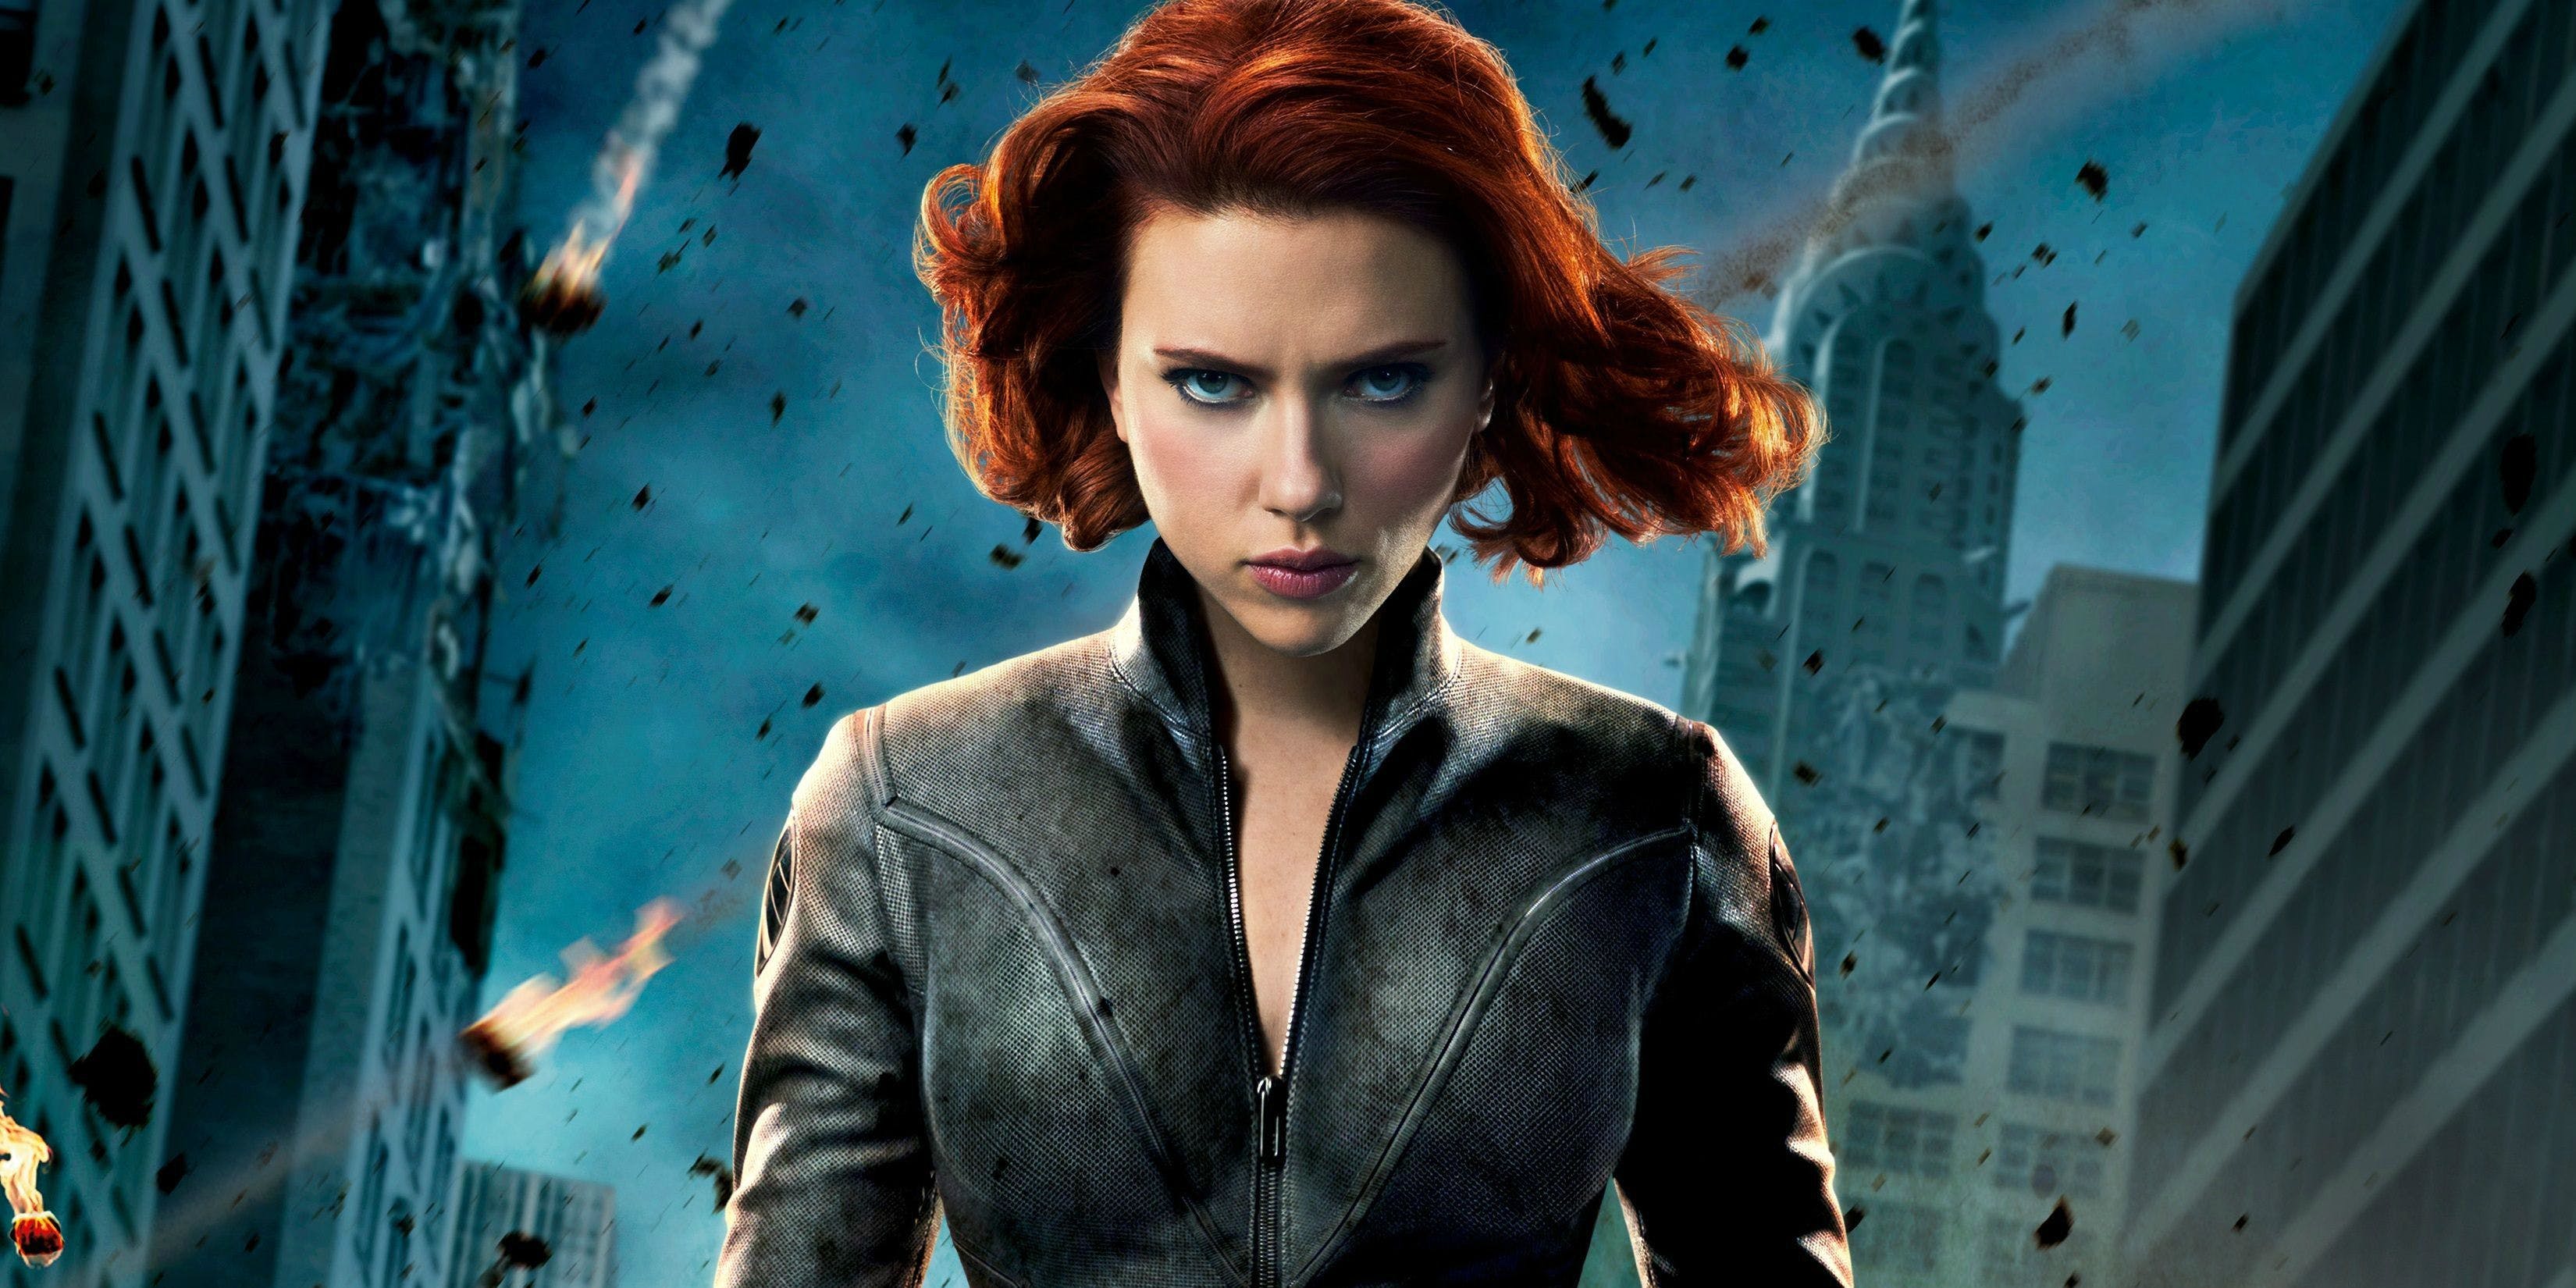 General 3300x1650 Scarlett Johansson Black Widow Marvel Comics The Avengers frontal view